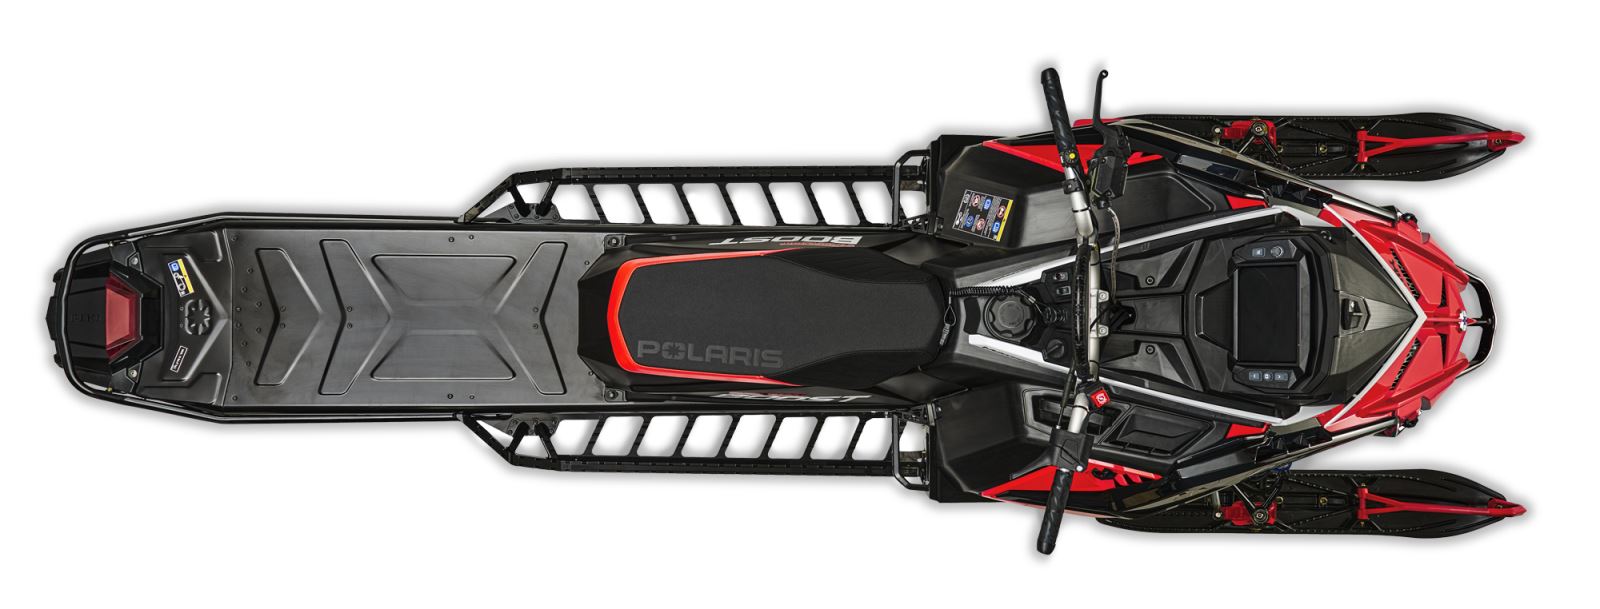 Polaris RMK Pro 600 2014 передний бампер. Polaris Pro-RMK 850 155 Khaos 2021 буфер лыжи. Снегоход Поларис Патриот. Patriot Boost RMK Khaos Matryx Slash 155 мотор. Платформа бусте